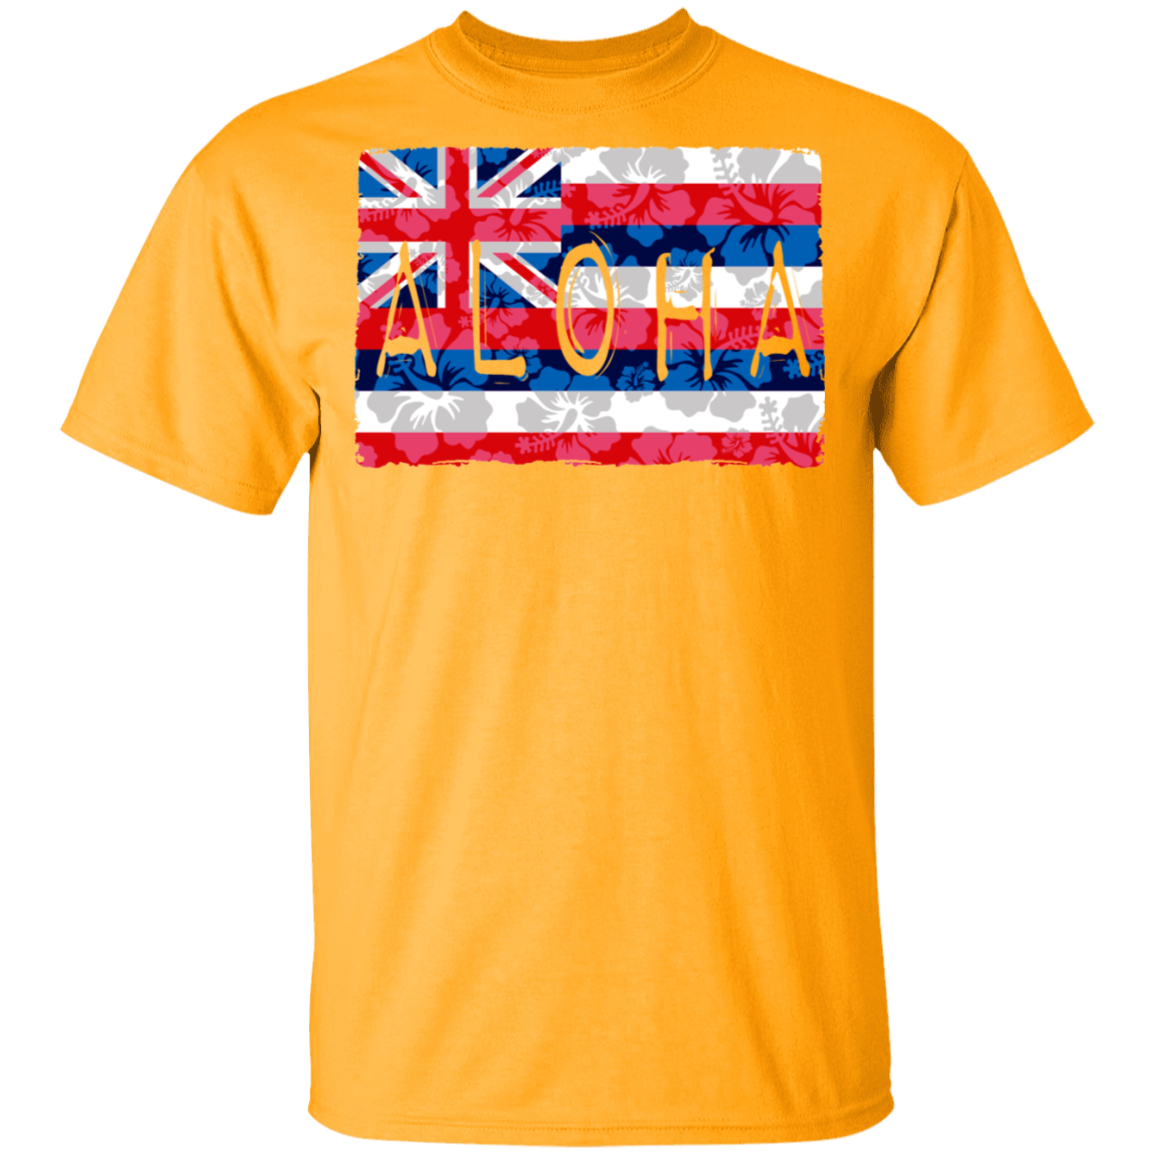 Aloha Floral Flag T-Shirt, T-Shirts, Hawaii Nei All Day